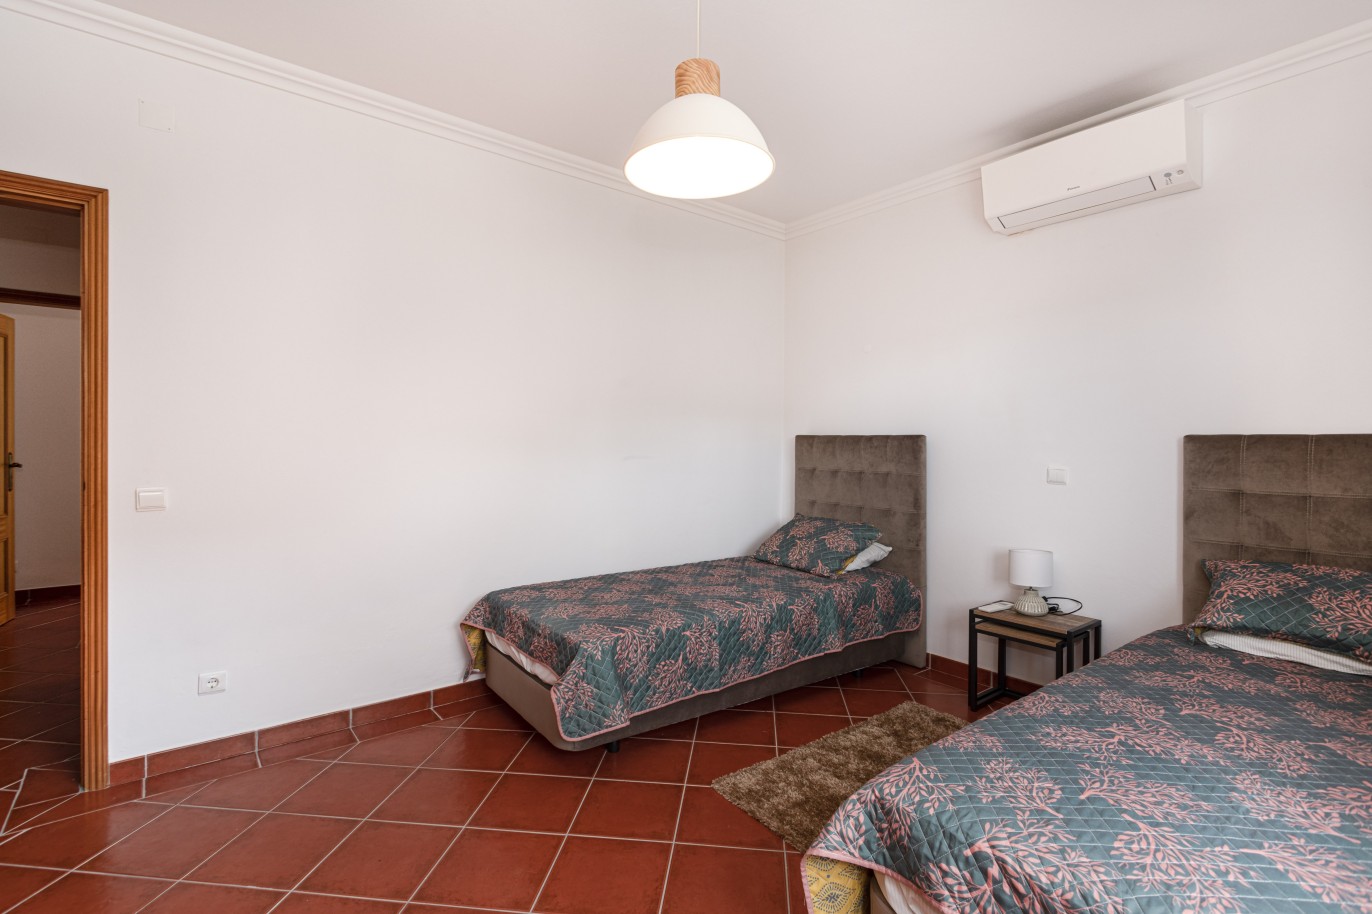 4-Bedroom Villa with swimming pool, for sale in Boliqueime, Loulé, Algarve_242640